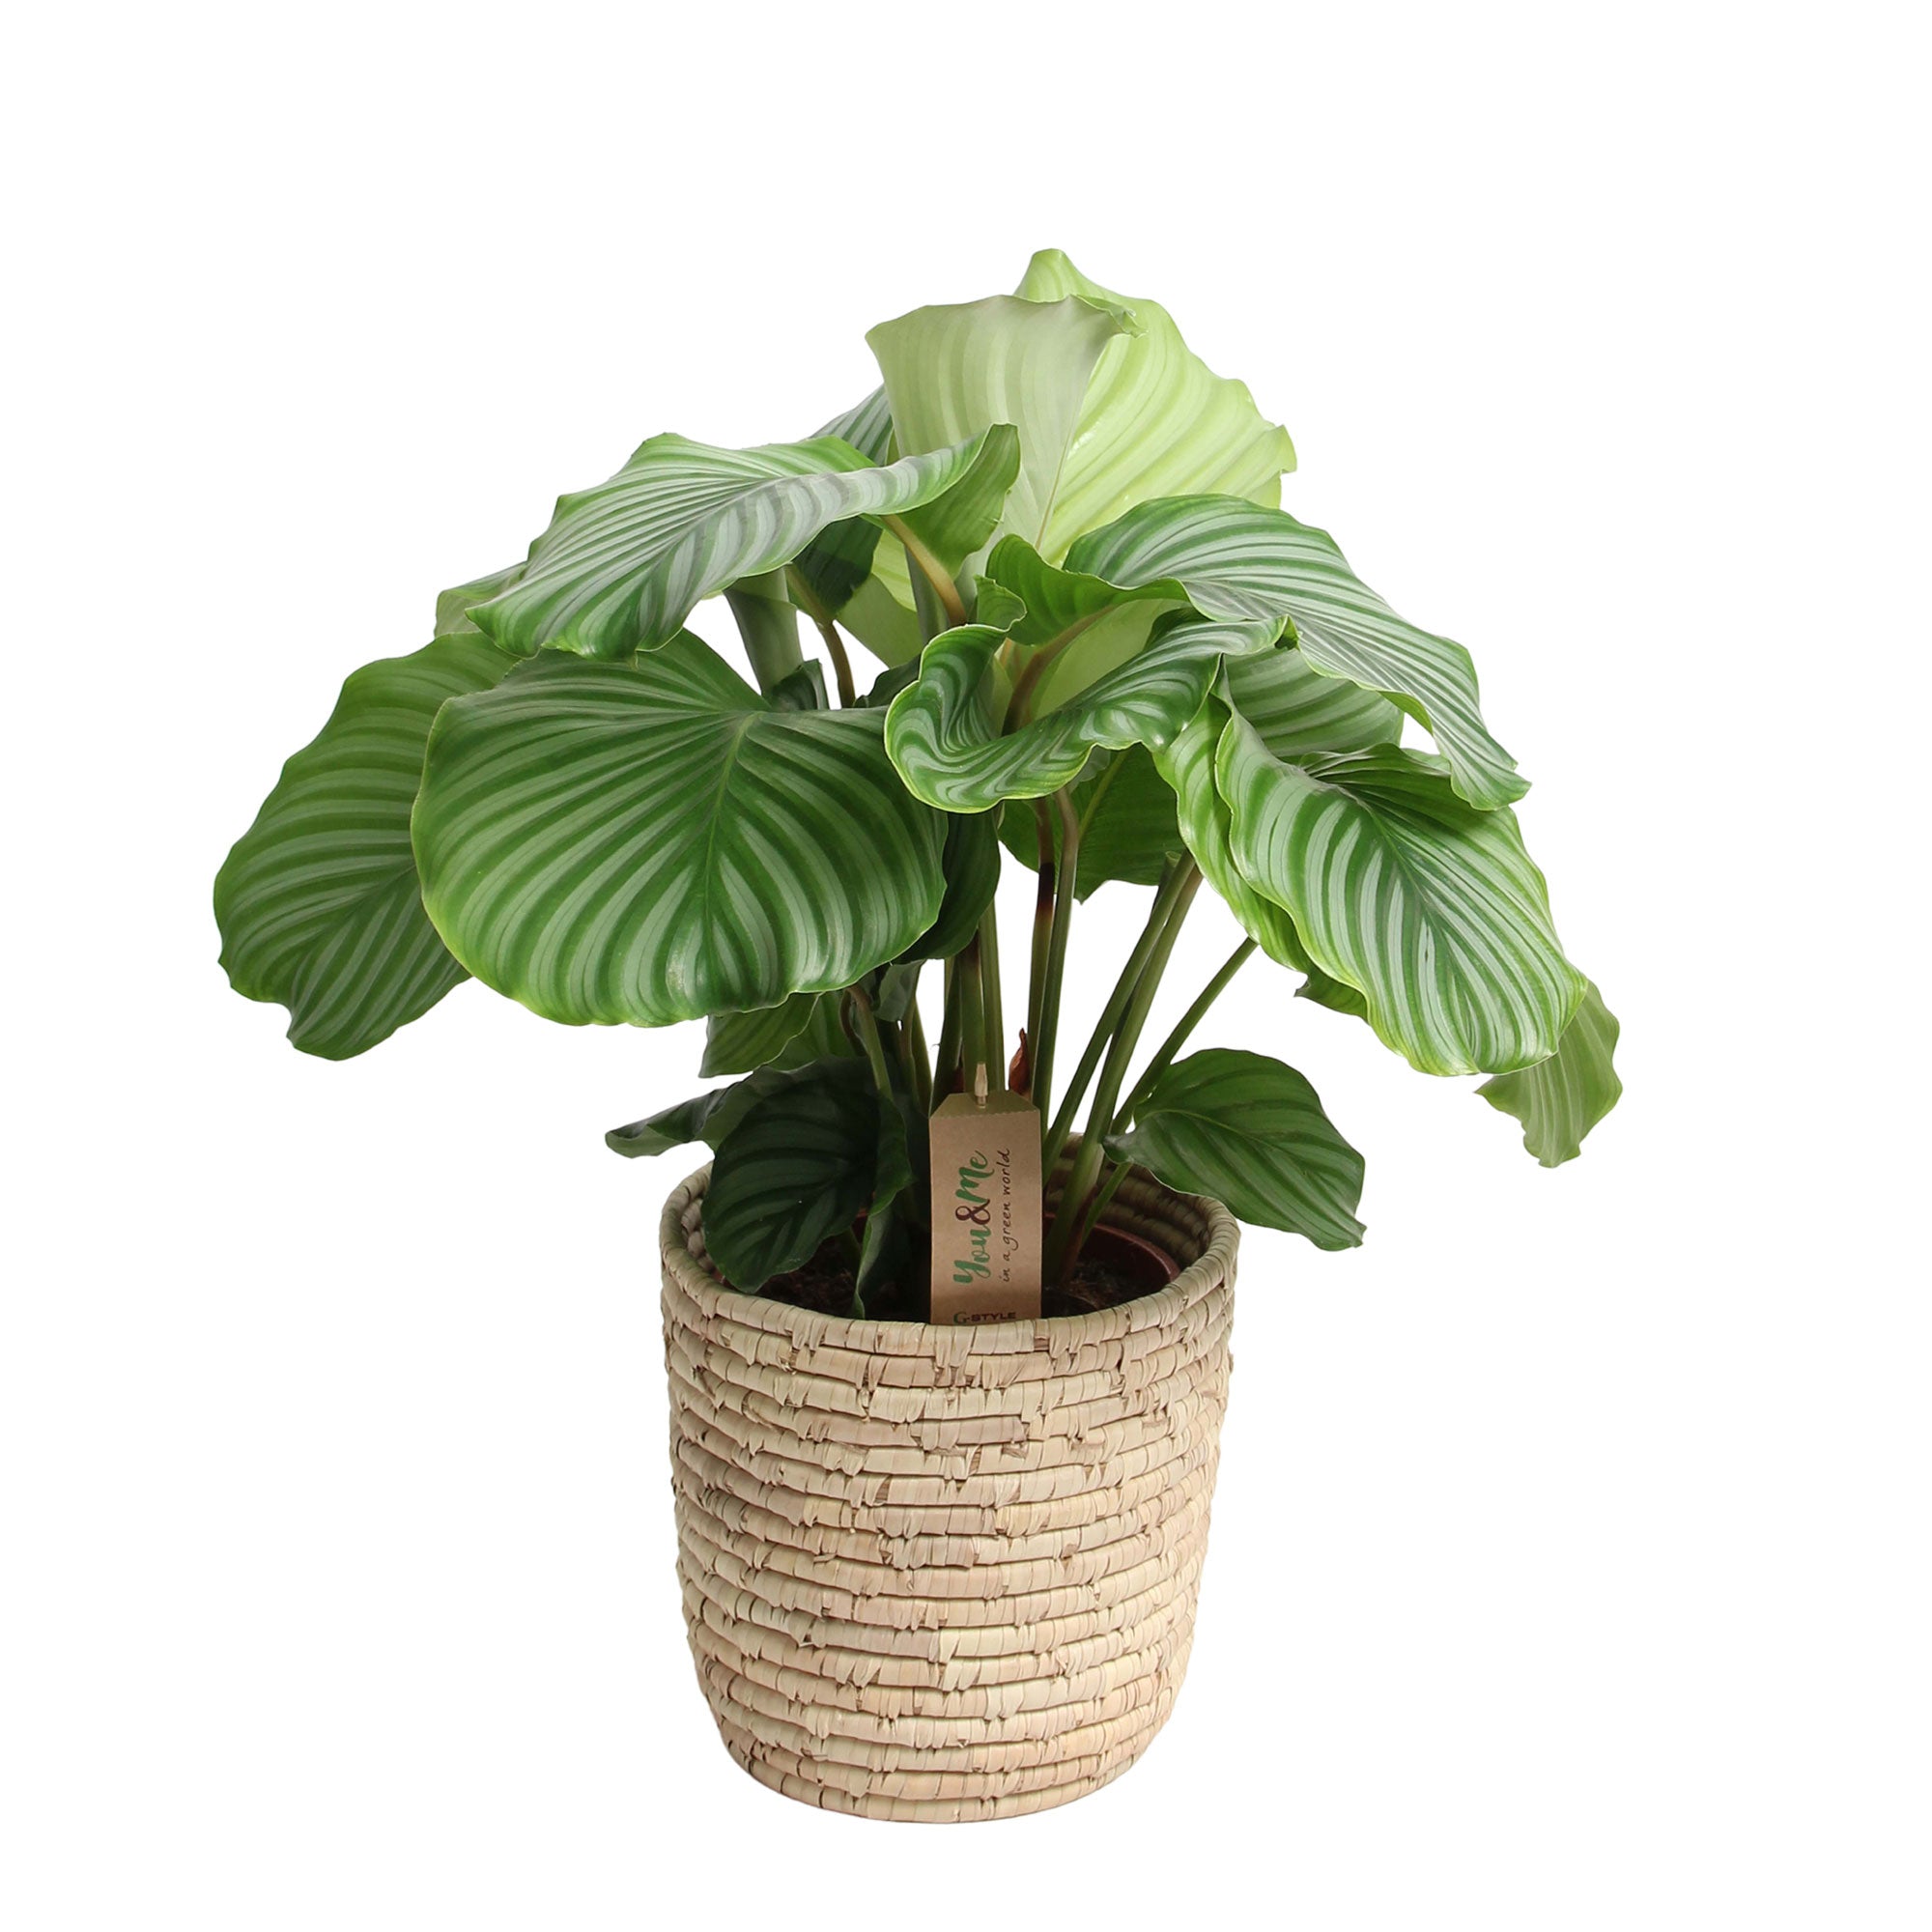 Buy house plants now Calathea orbifolia with palm leaf basket 